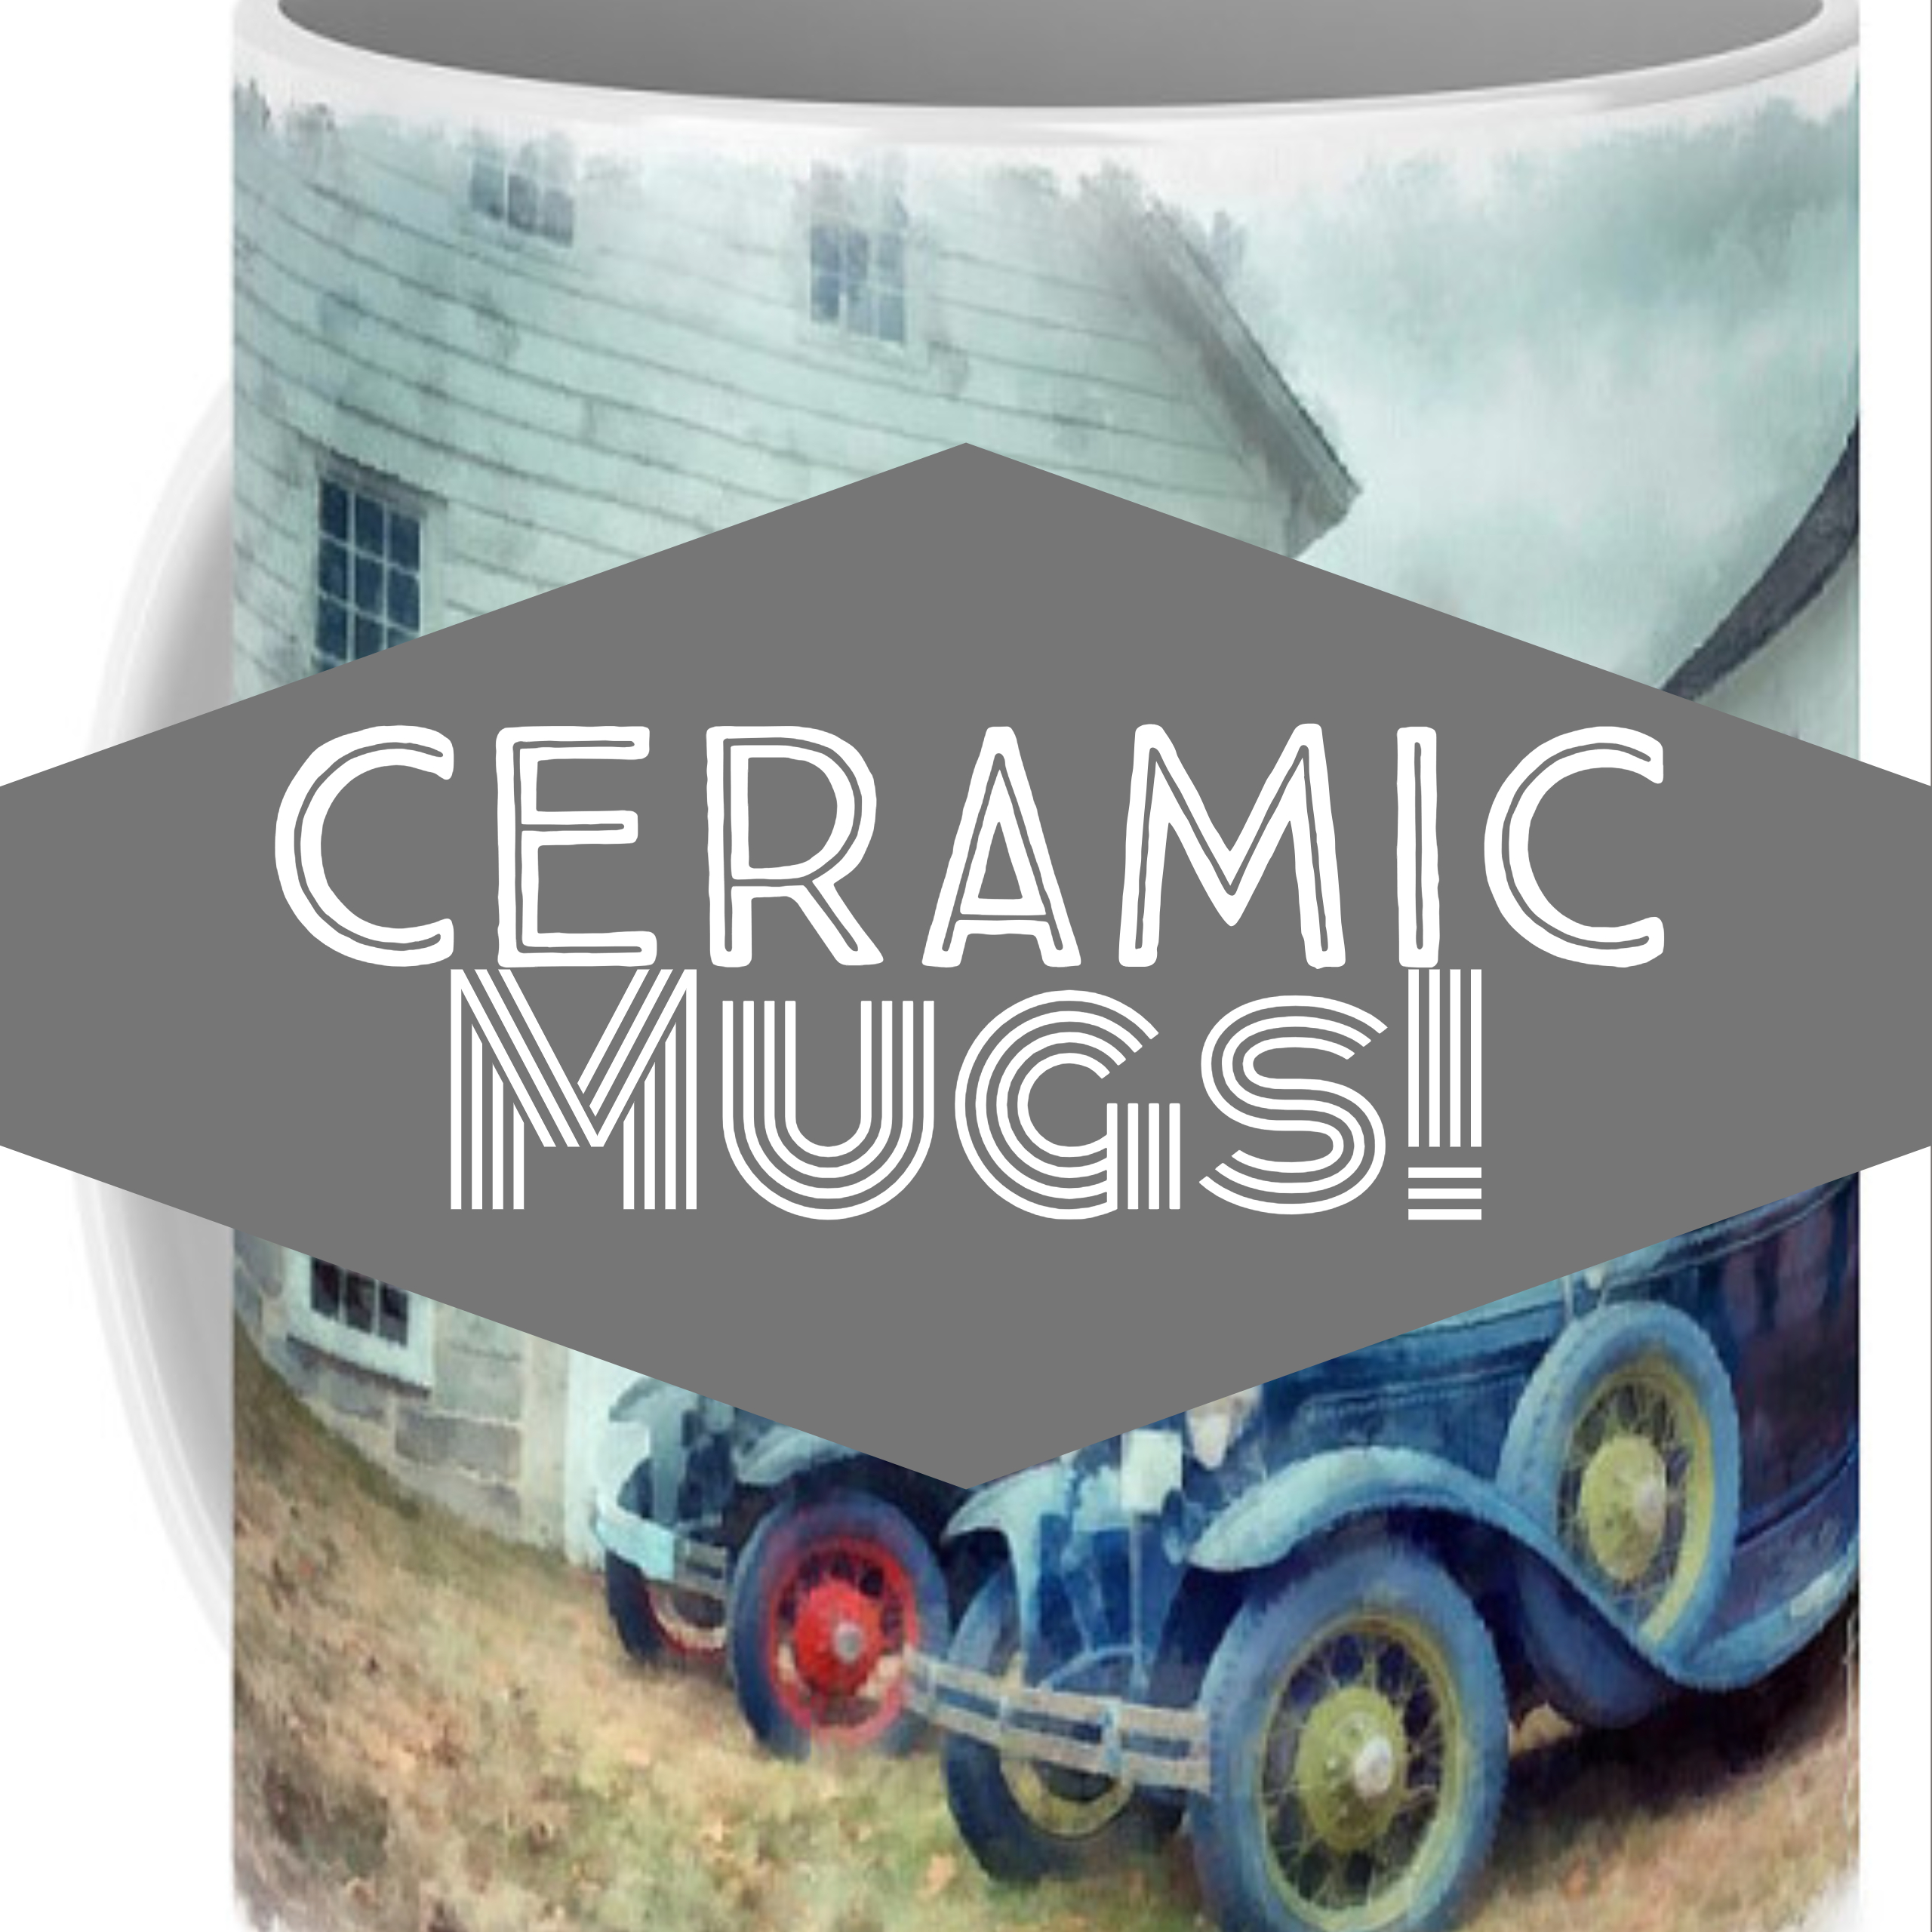 Ceramic Coffee mugs for sale